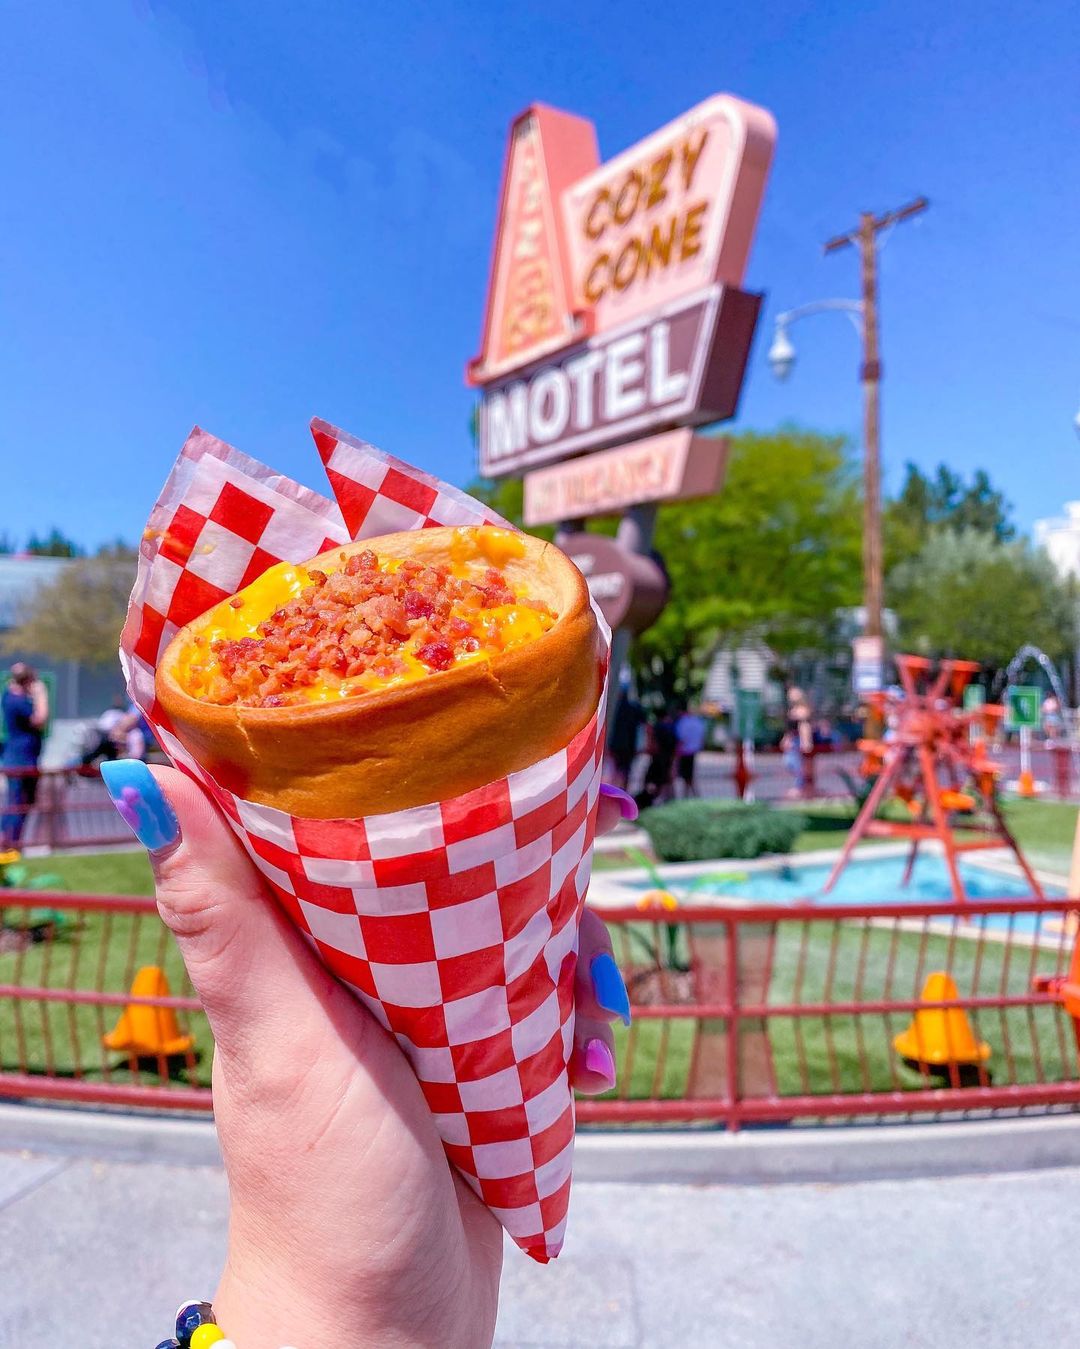 Cozy Cone Motel - Disneyland California Themed Restaurant